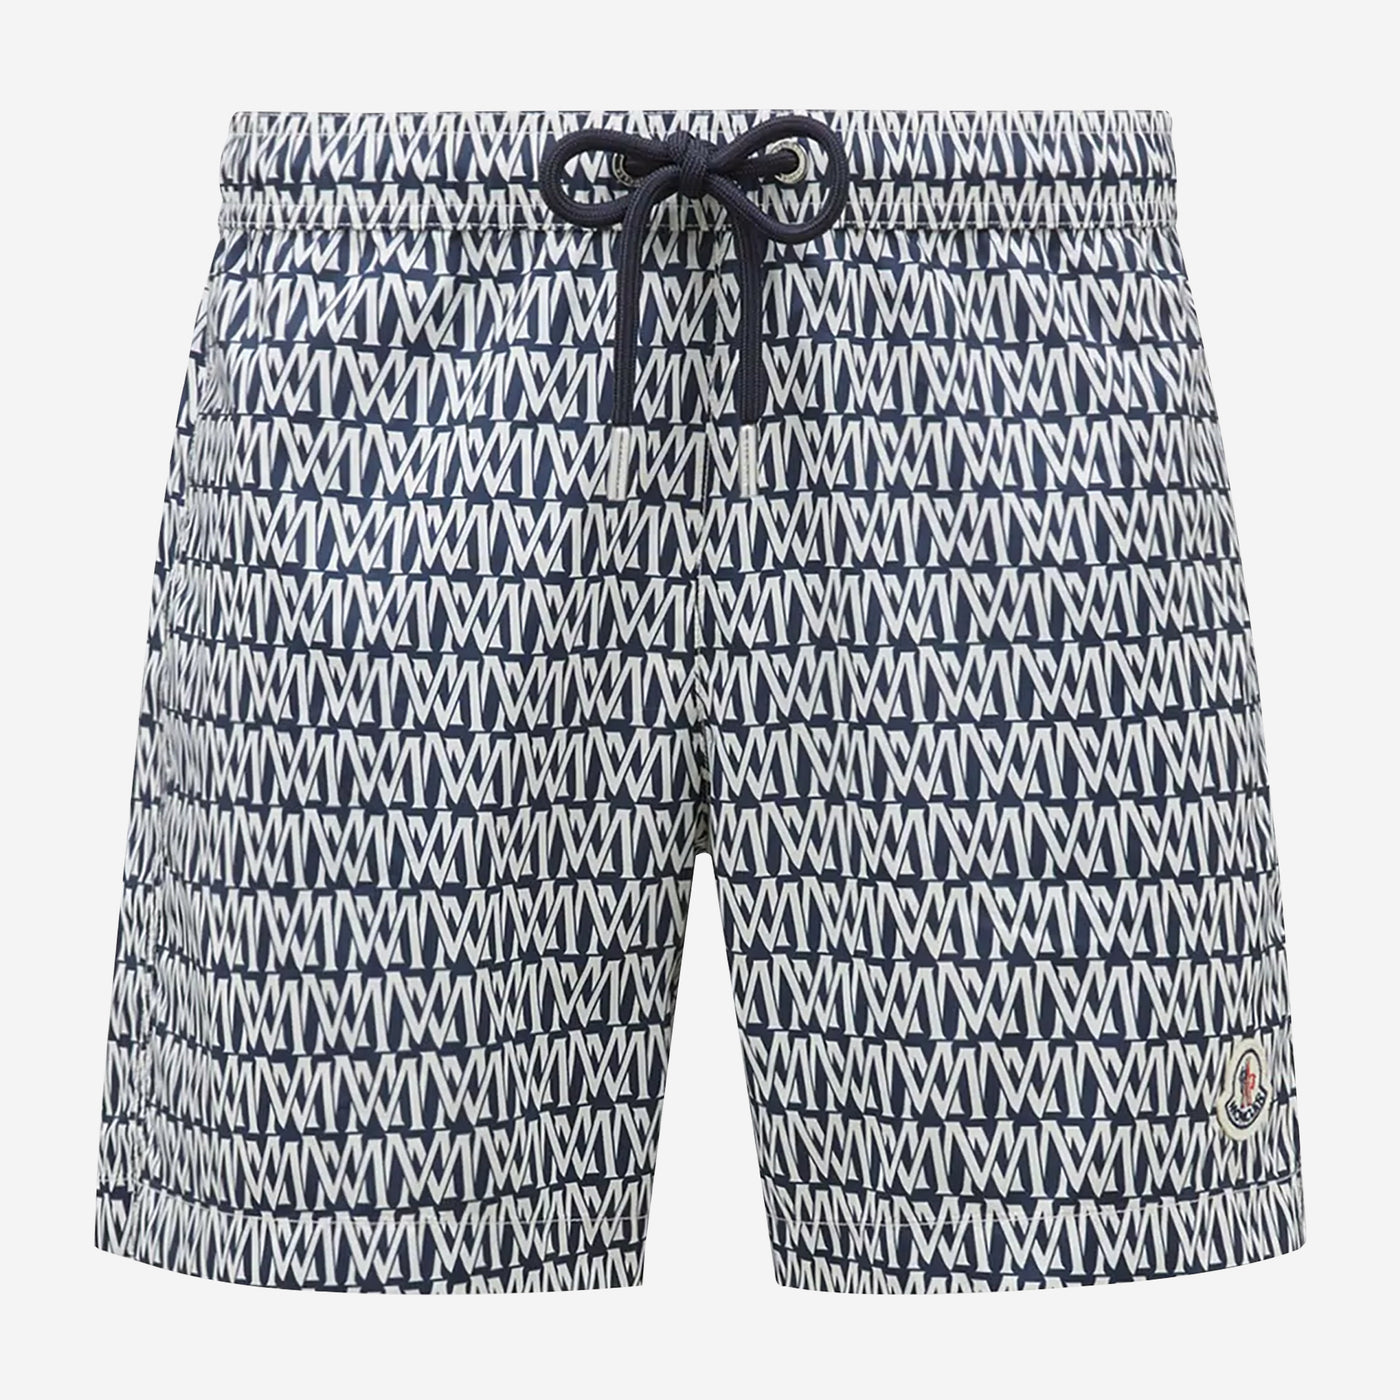 Moncler Monogram Print Swim Shorts